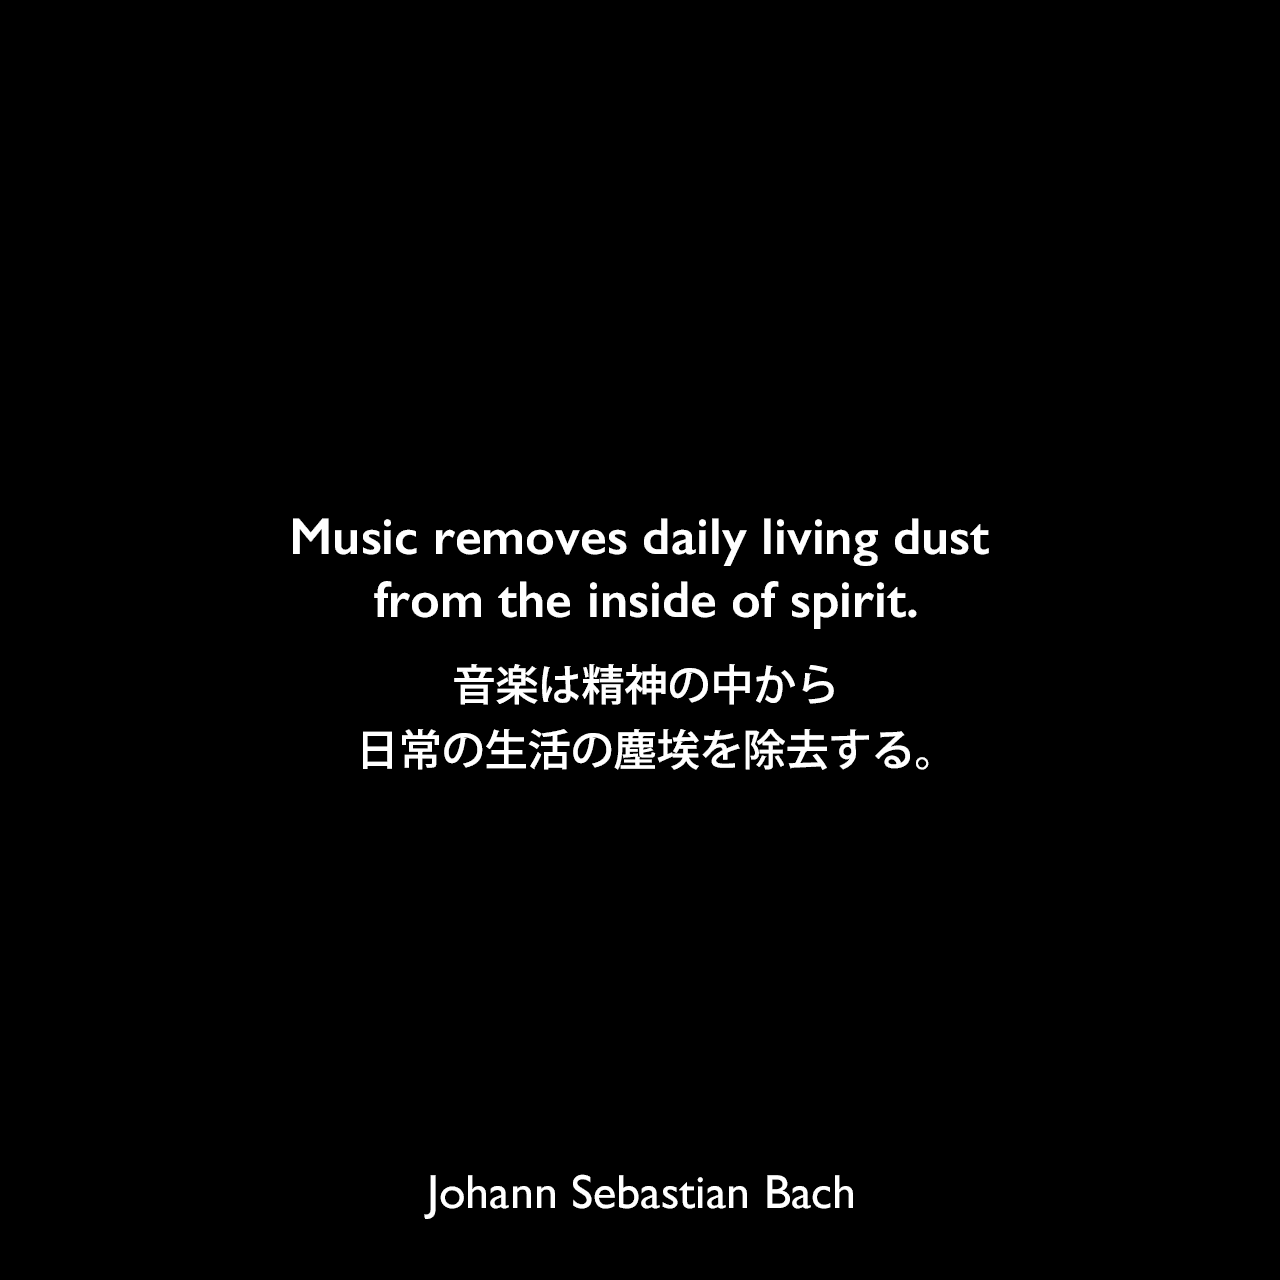 Music removes daily living dust from the inside of spirit.音楽は精神の中から、日常の生活の塵埃を除去する。Johann Sebastian Bach